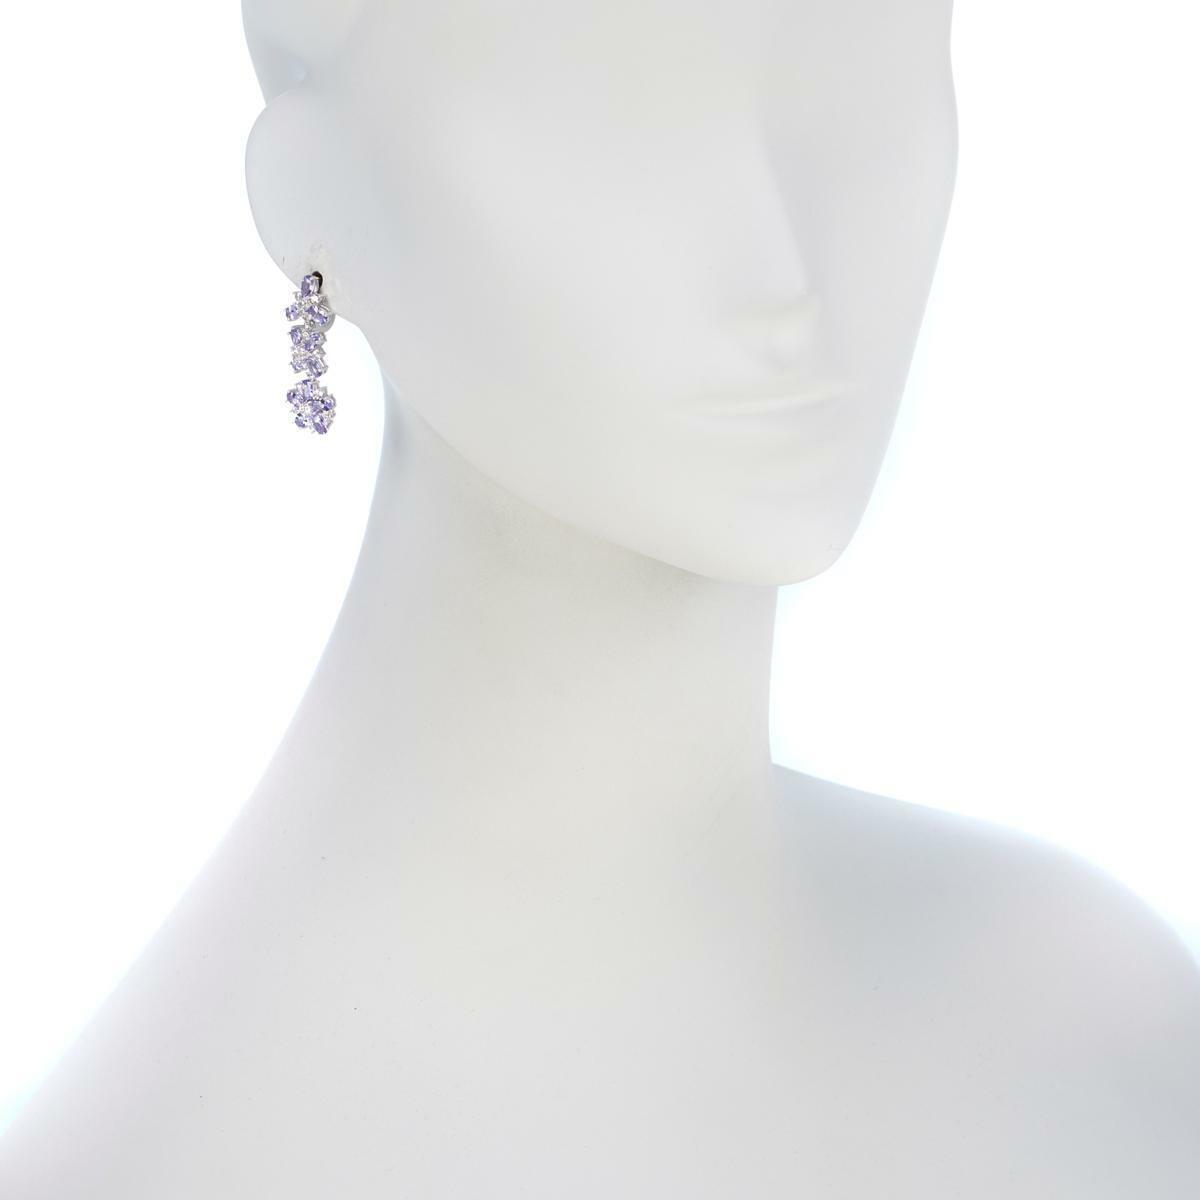 Colleen Lopez 761ctw Tanzanite and White Zircon Flower Drop Earrings